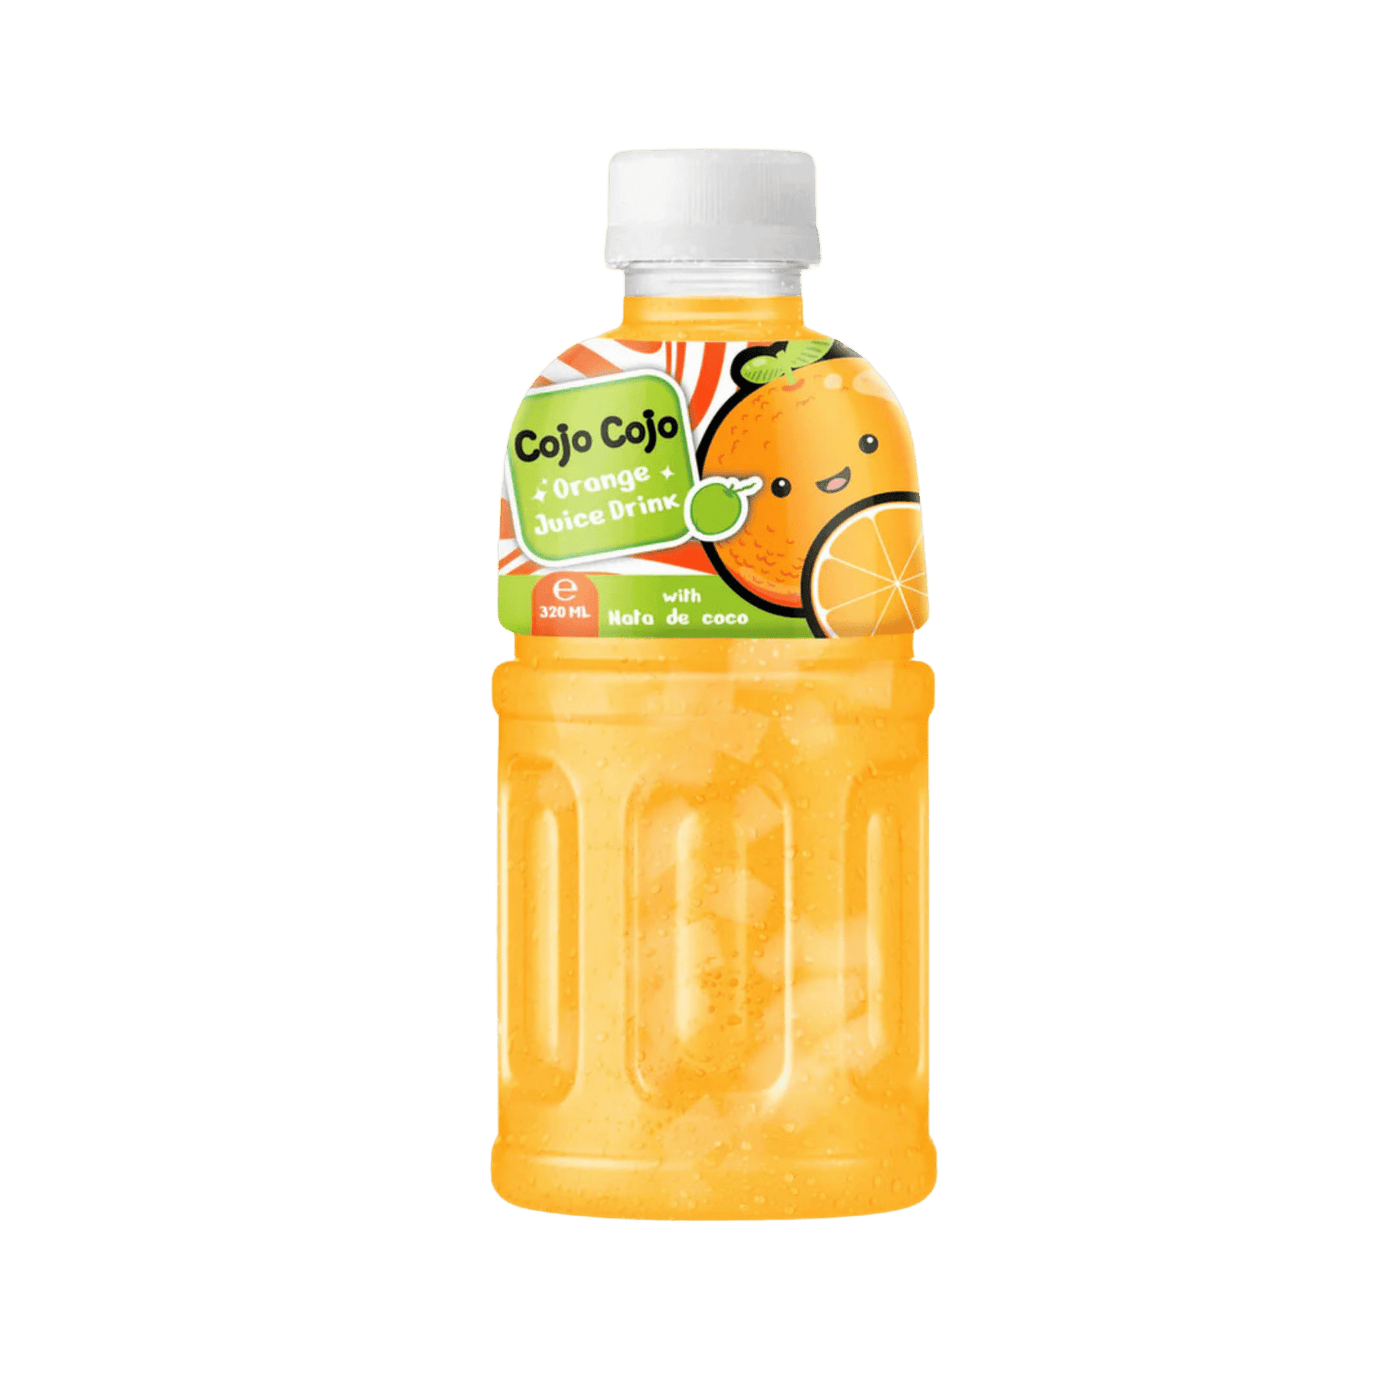 Cojo Cojo - Juice drink - Thaïlande (320ml)